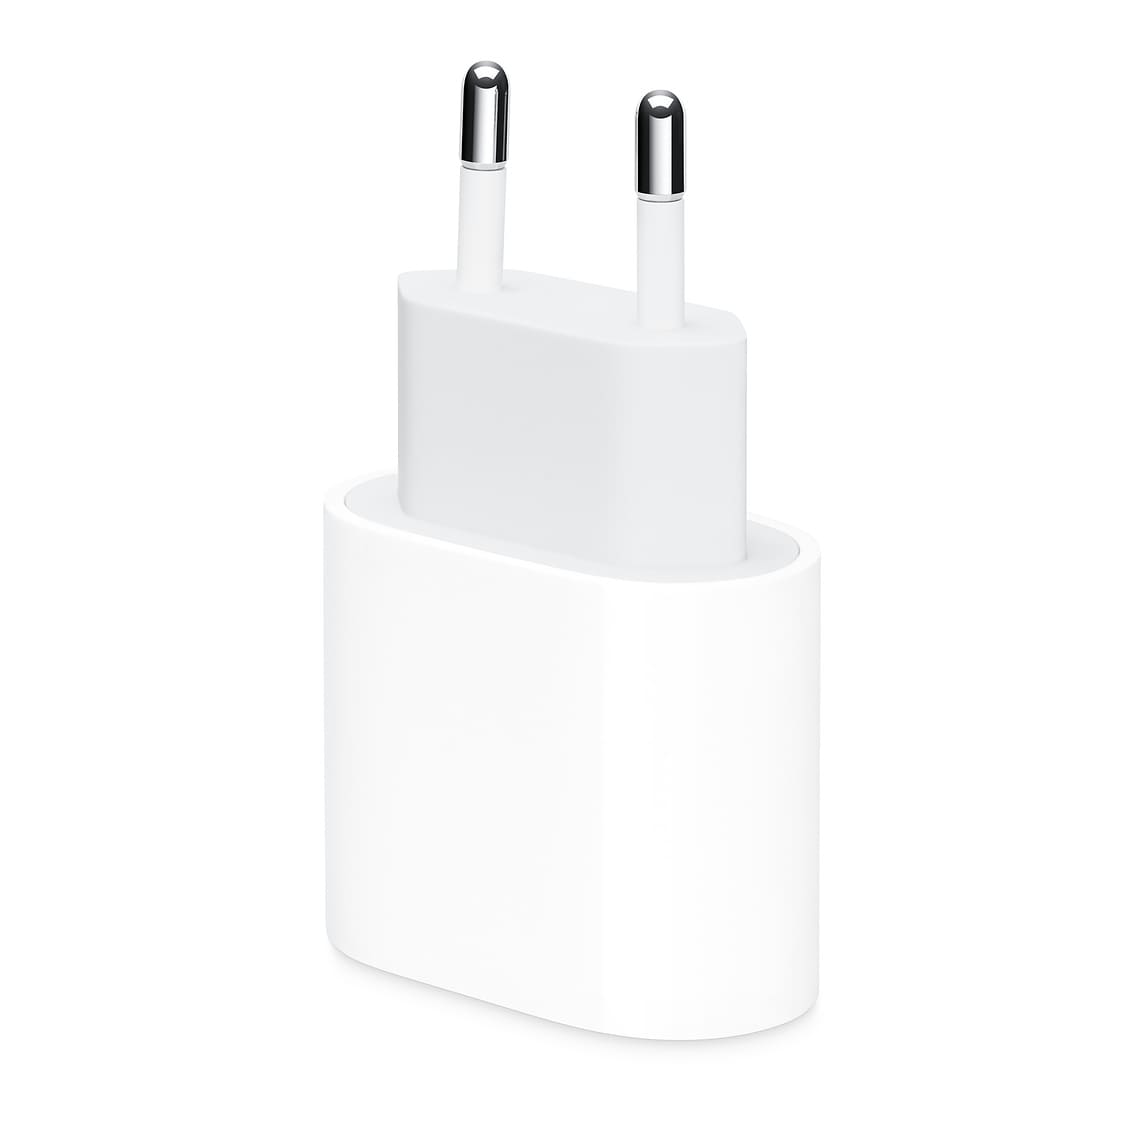 Зарядное устройство Apple USB-C мощностью 18 Вт